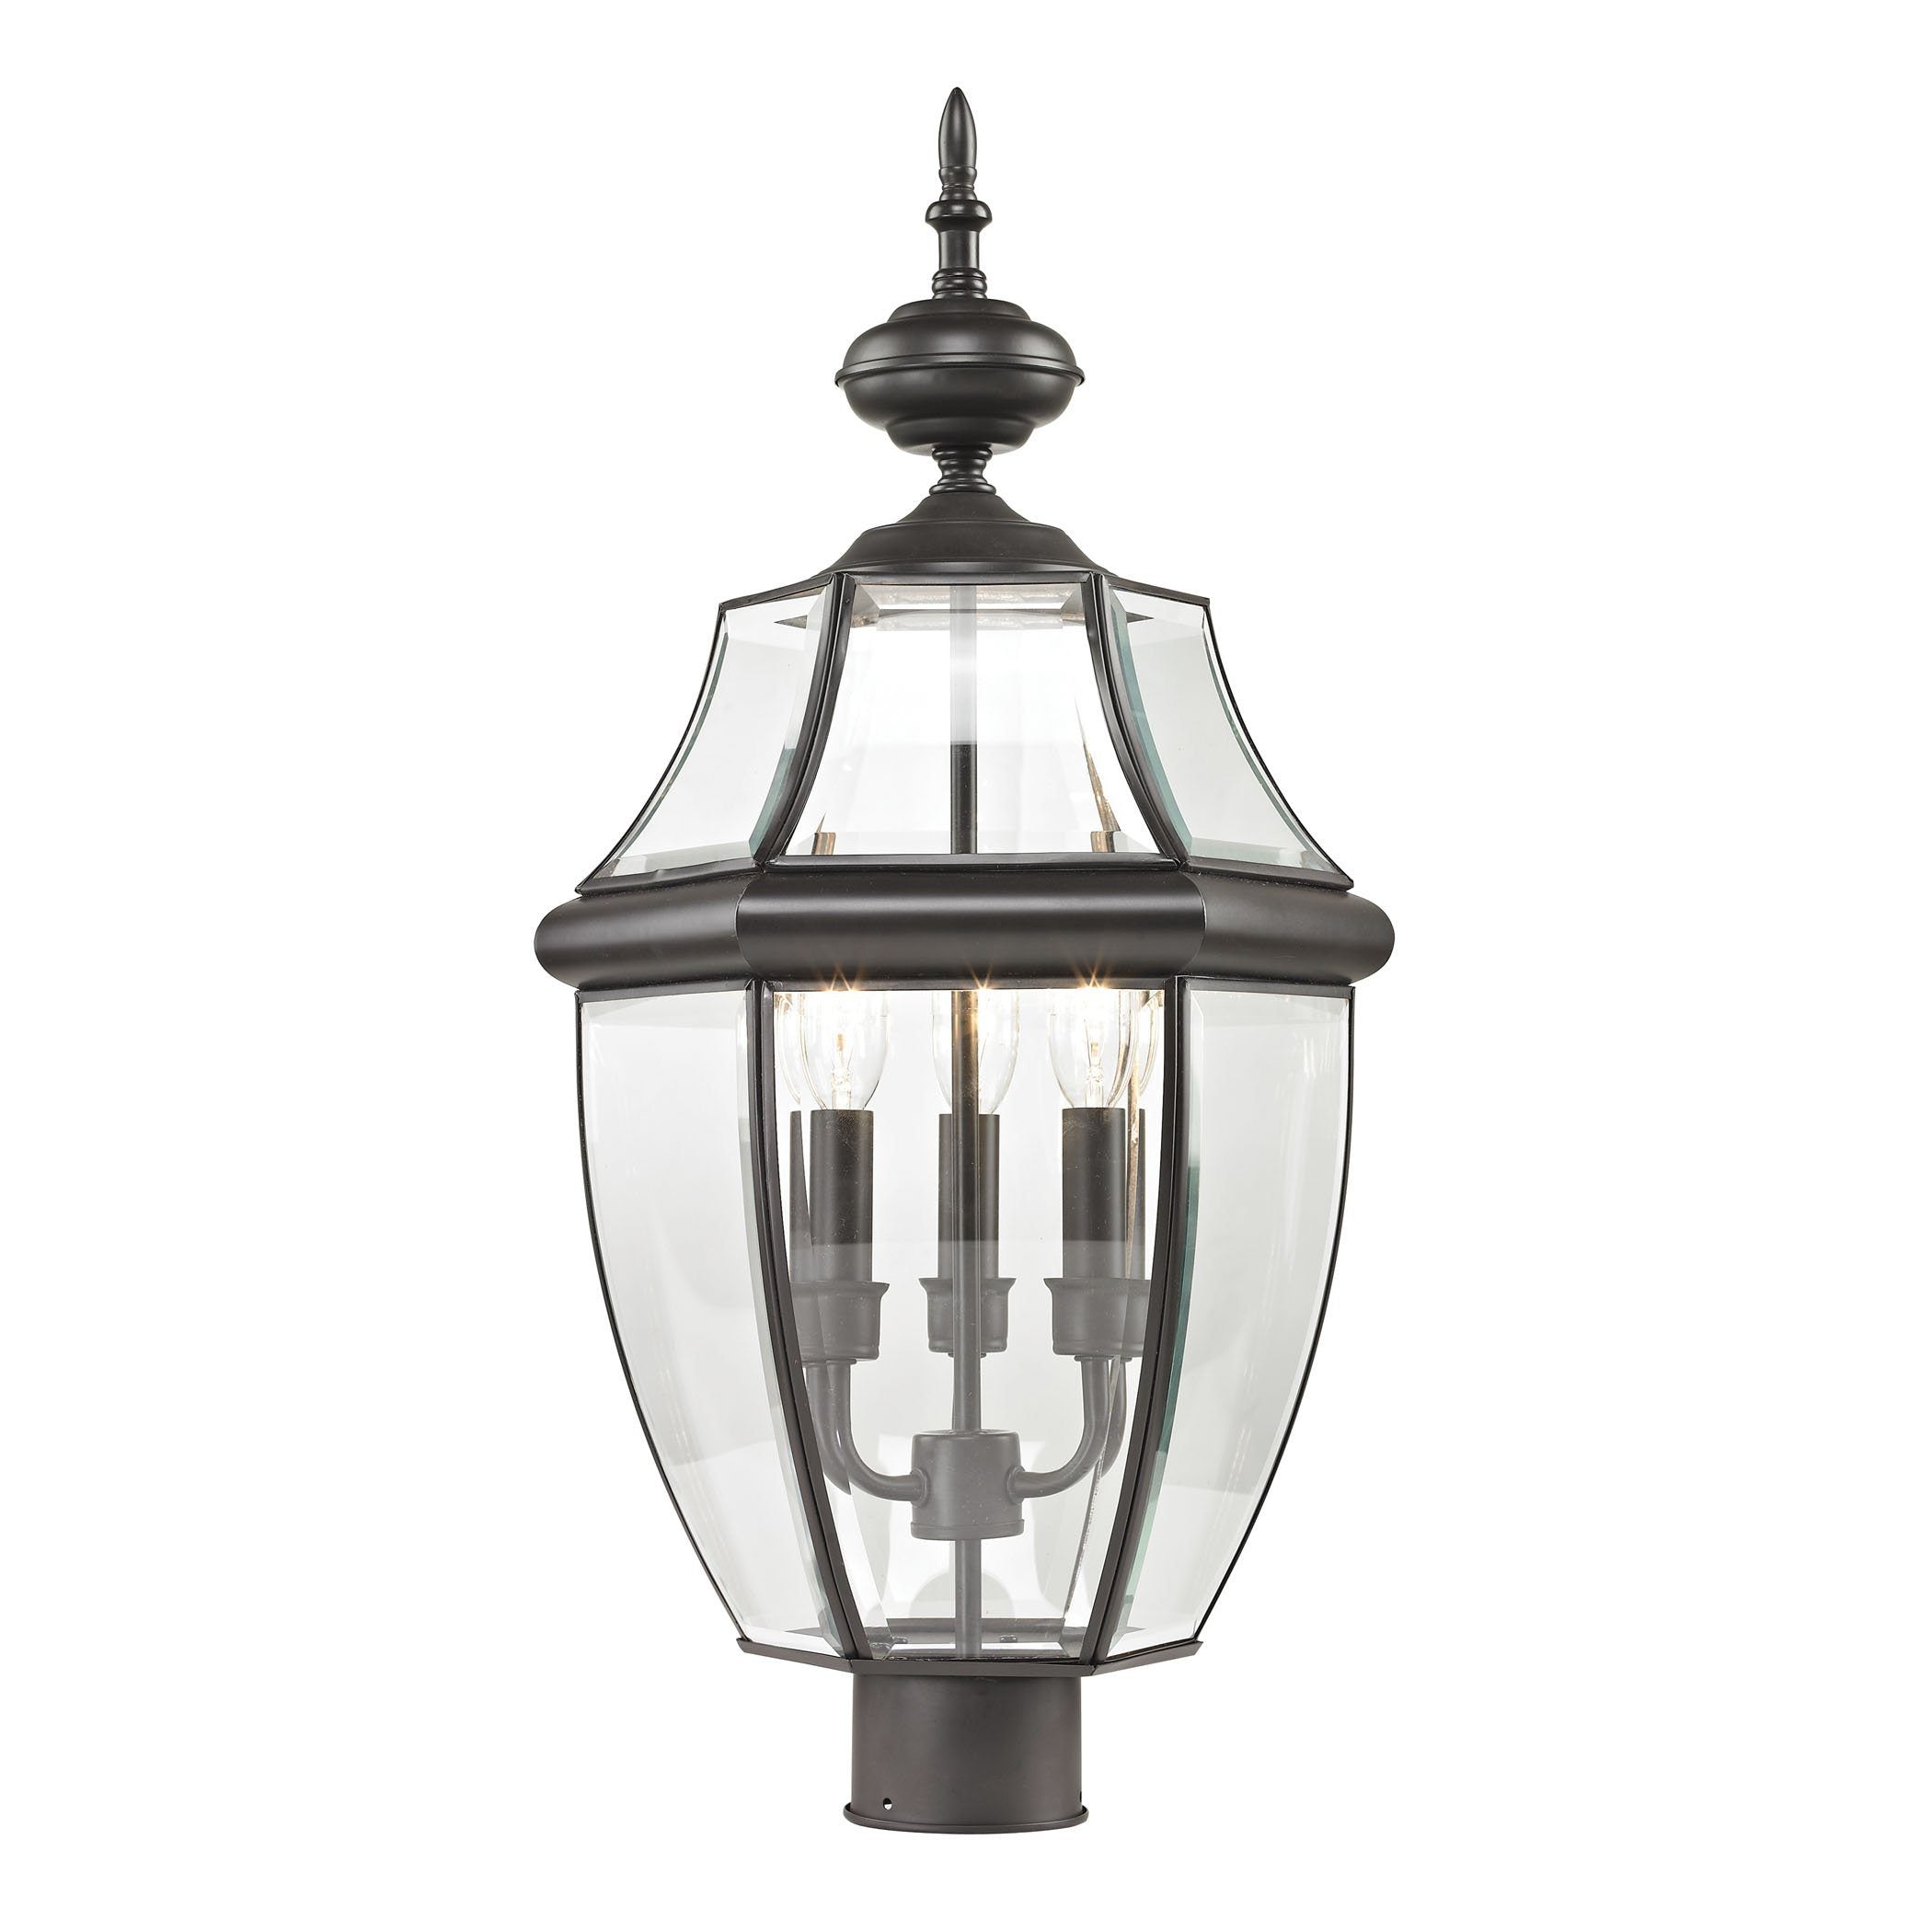 Ashford 3-Light Post Mount Lantern in Oil Rubbed Bronze - Large Outdoor Lighting Thomas Lighting 